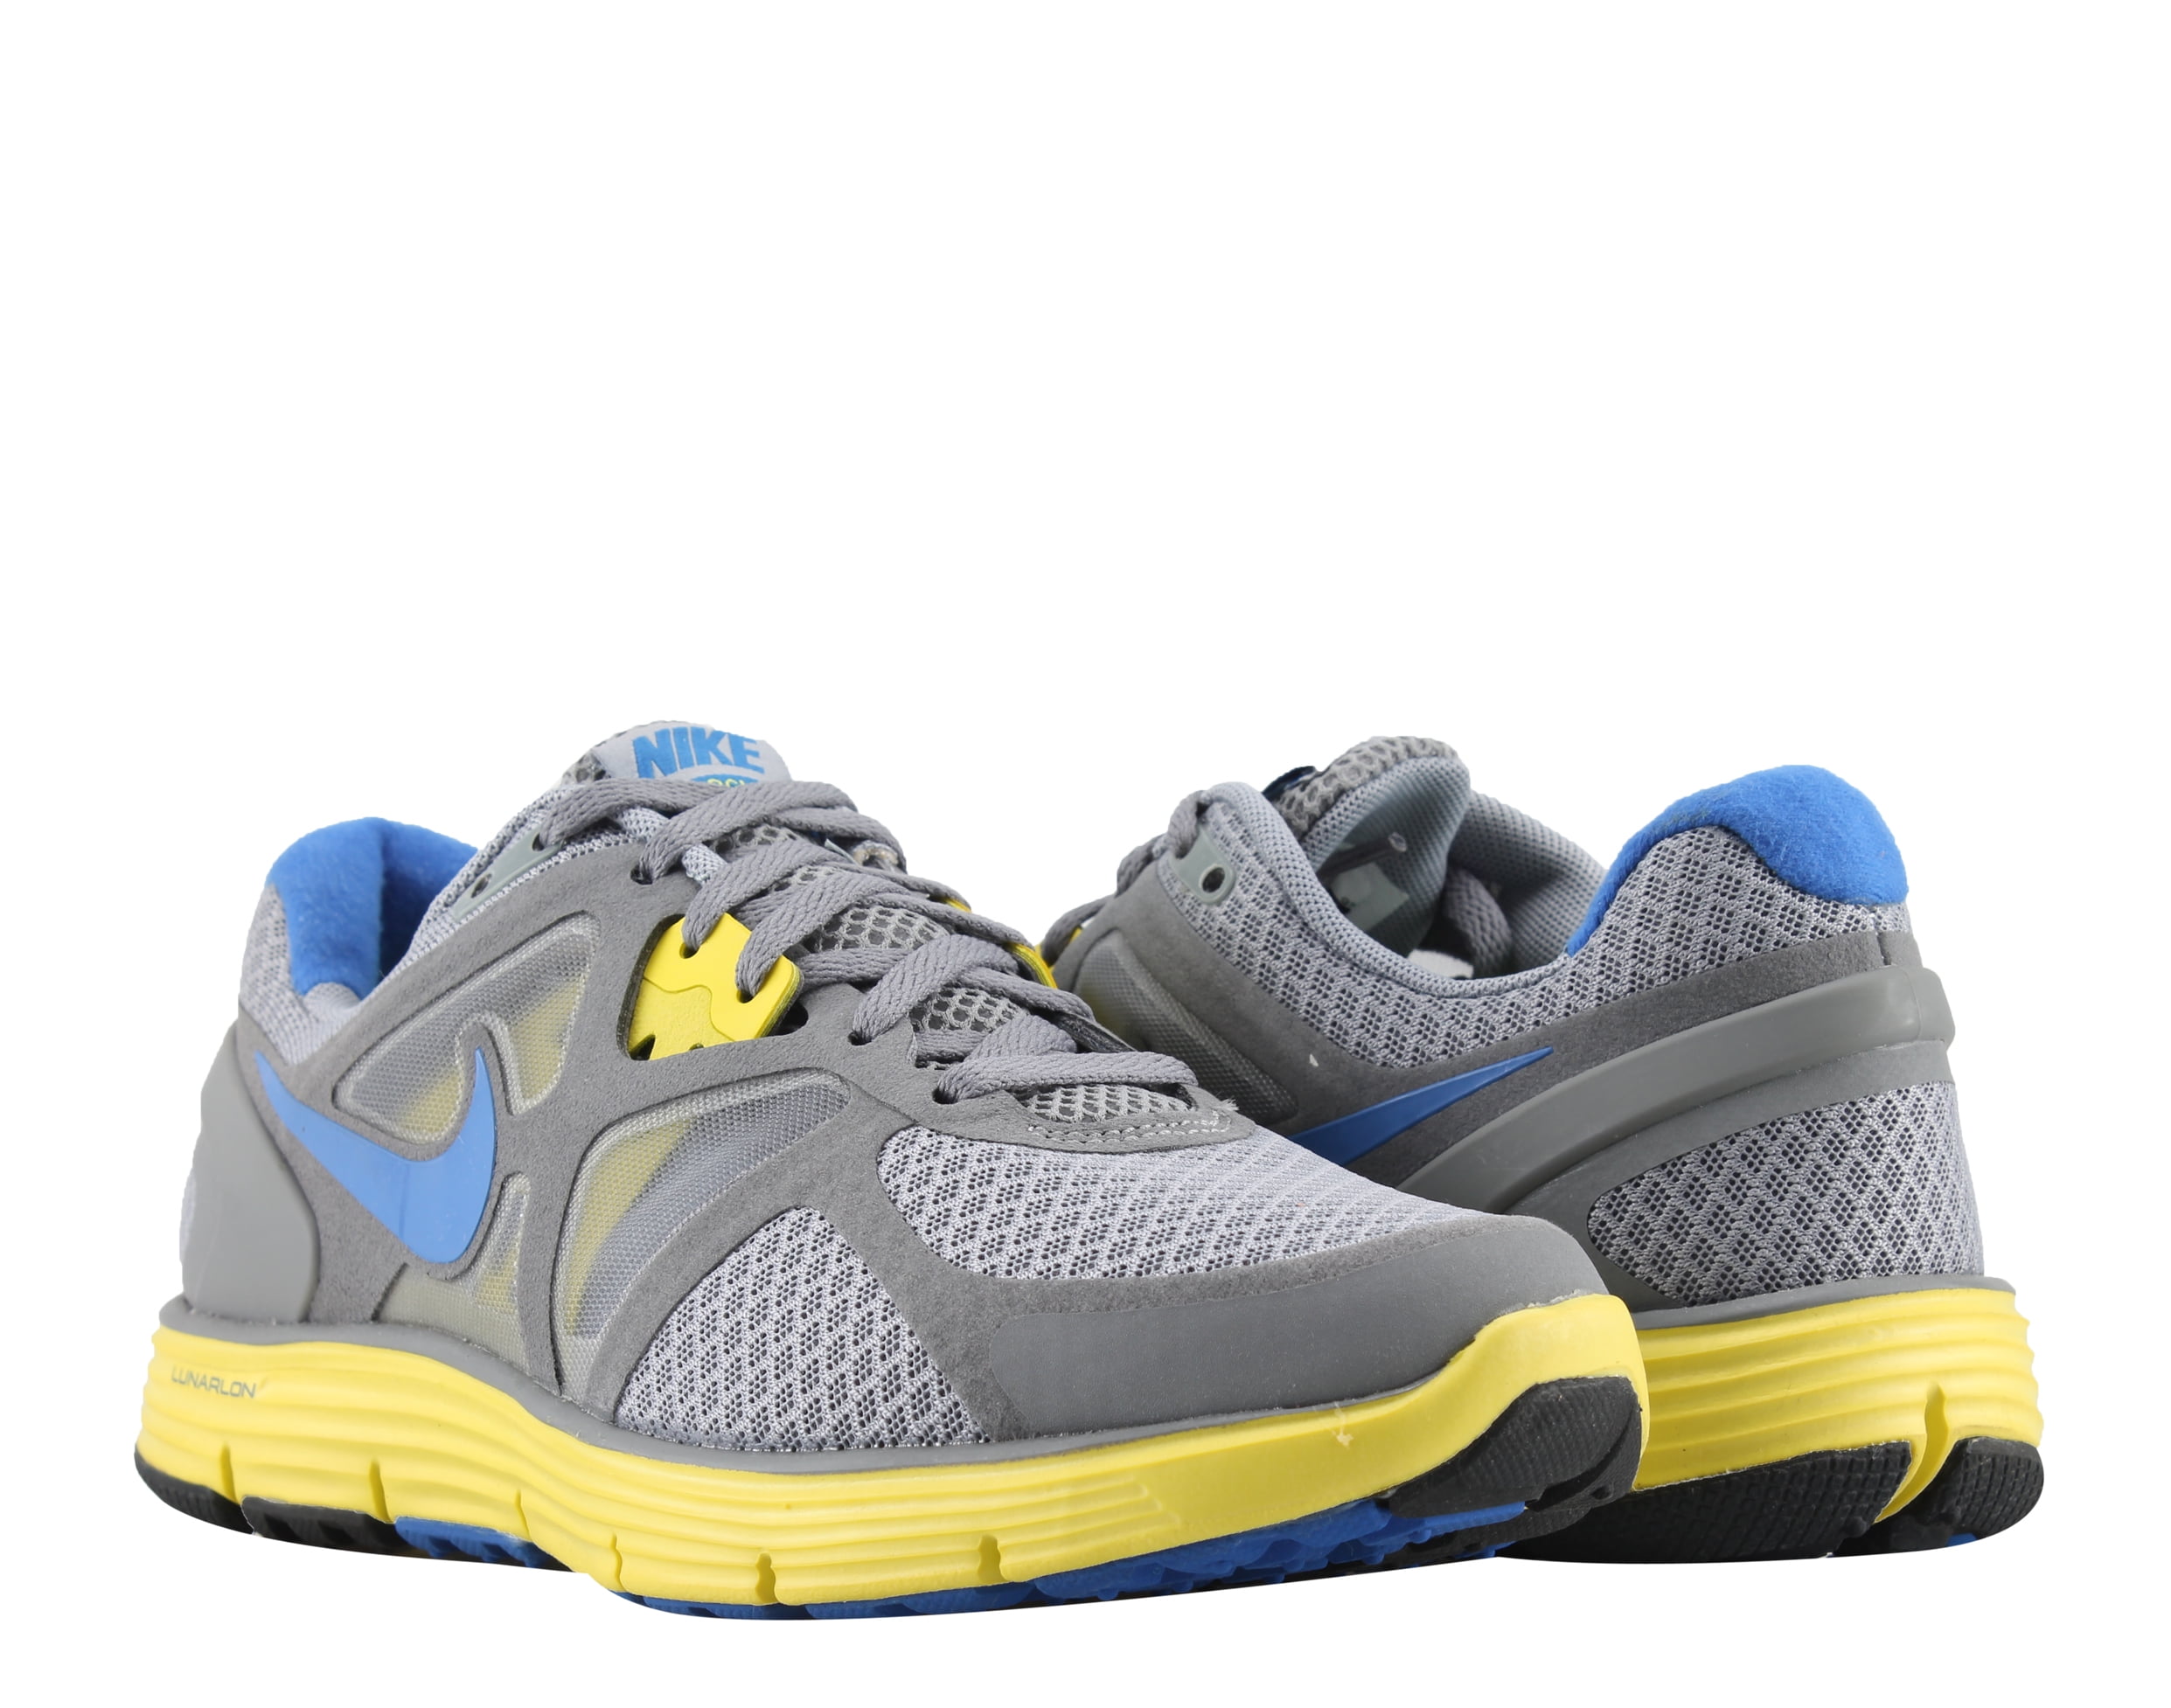 Extremistas Negligencia médica Teórico Nike Lunarglide+ 3 Women's Running Shoes Size 9.5 - Walmart.com